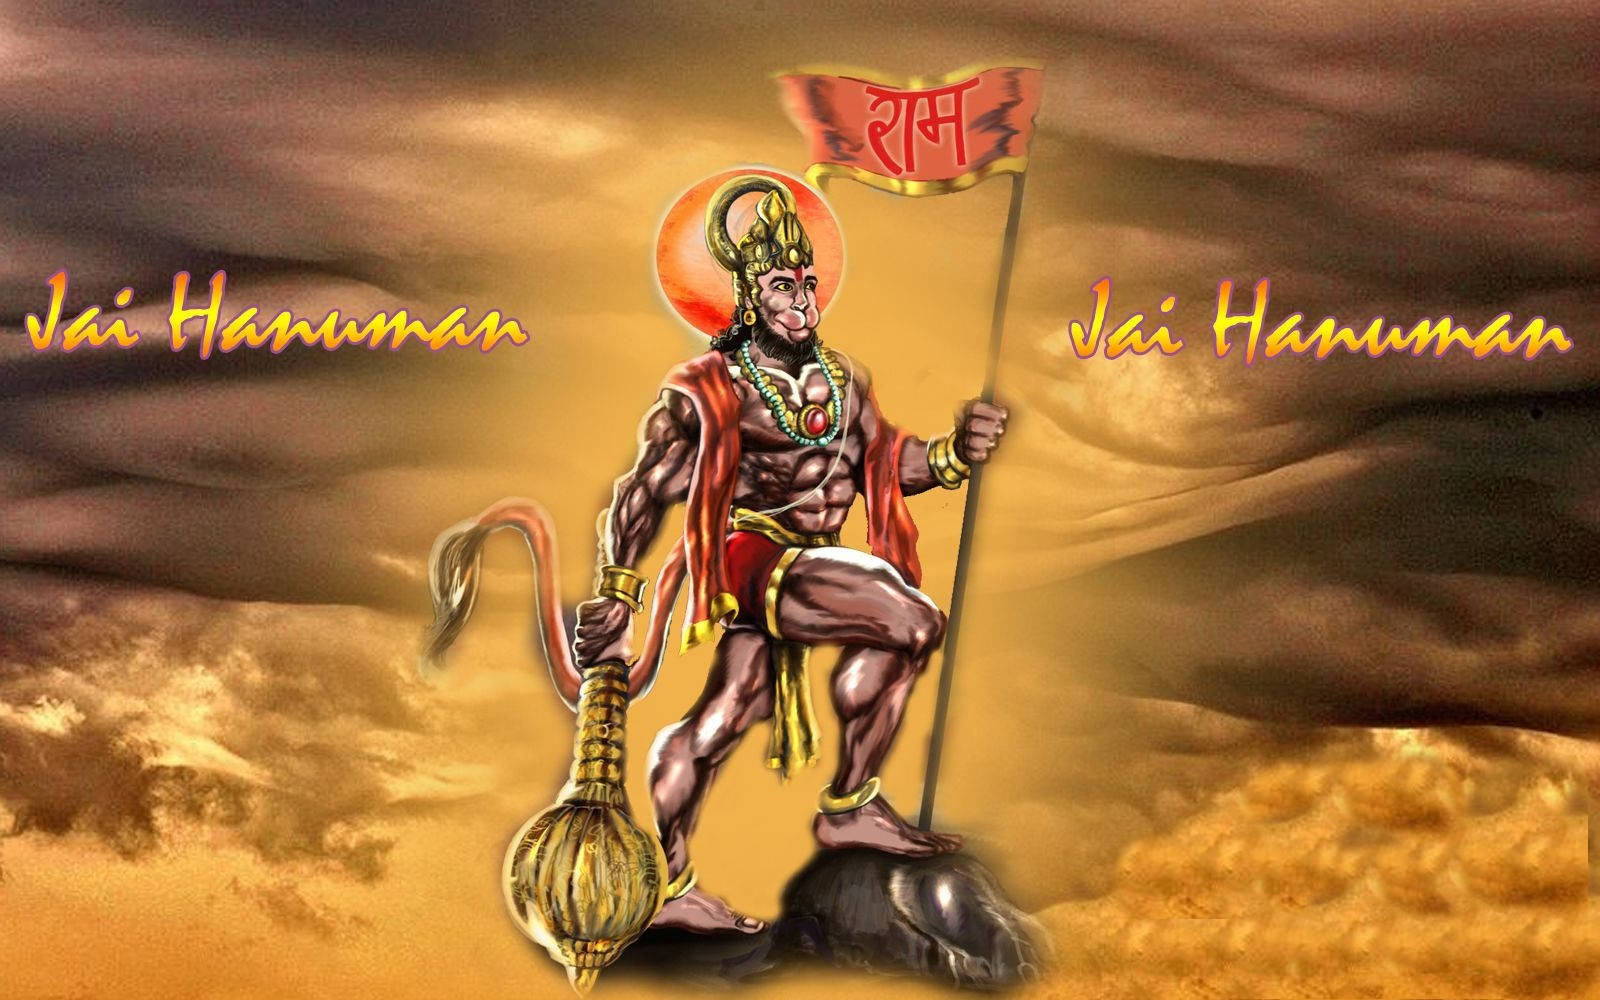 Divine Inspiration Under Yellow Skies - The Revered Jai Hanuman